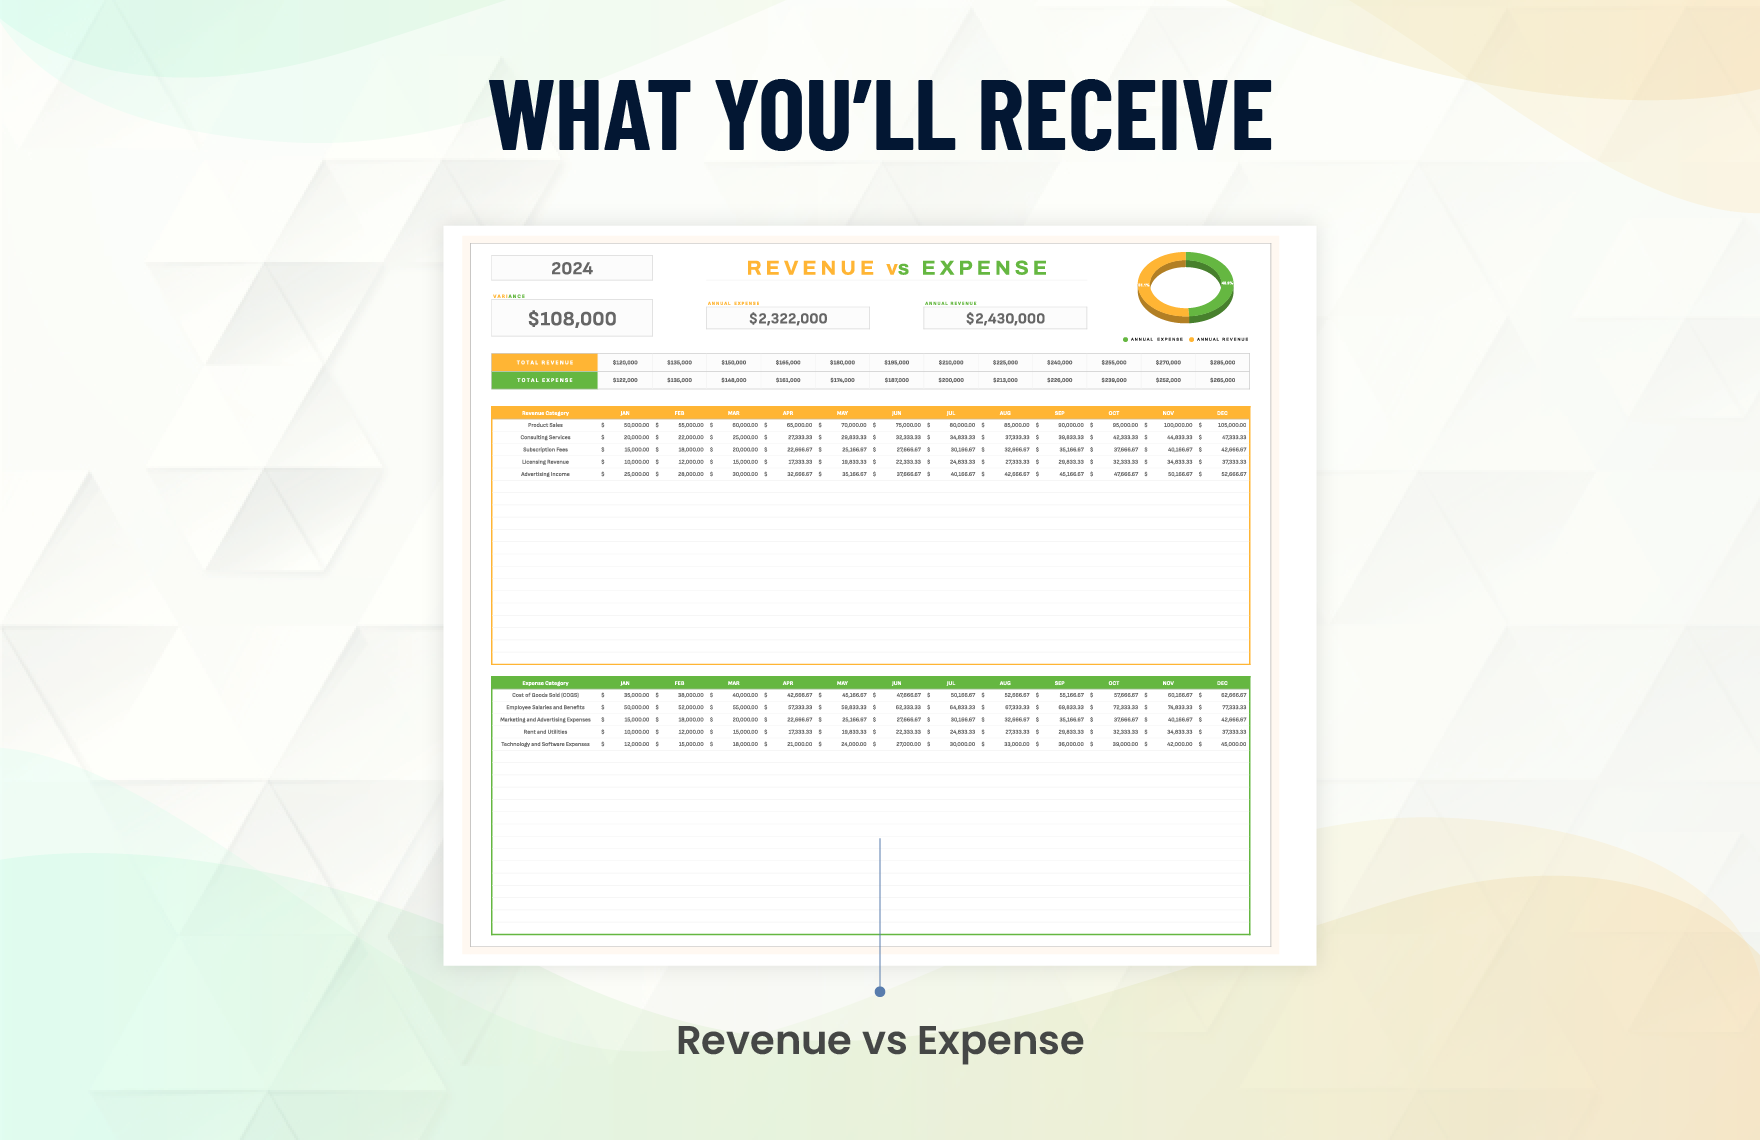 Finance Revenue vs. Expense Analysis Template